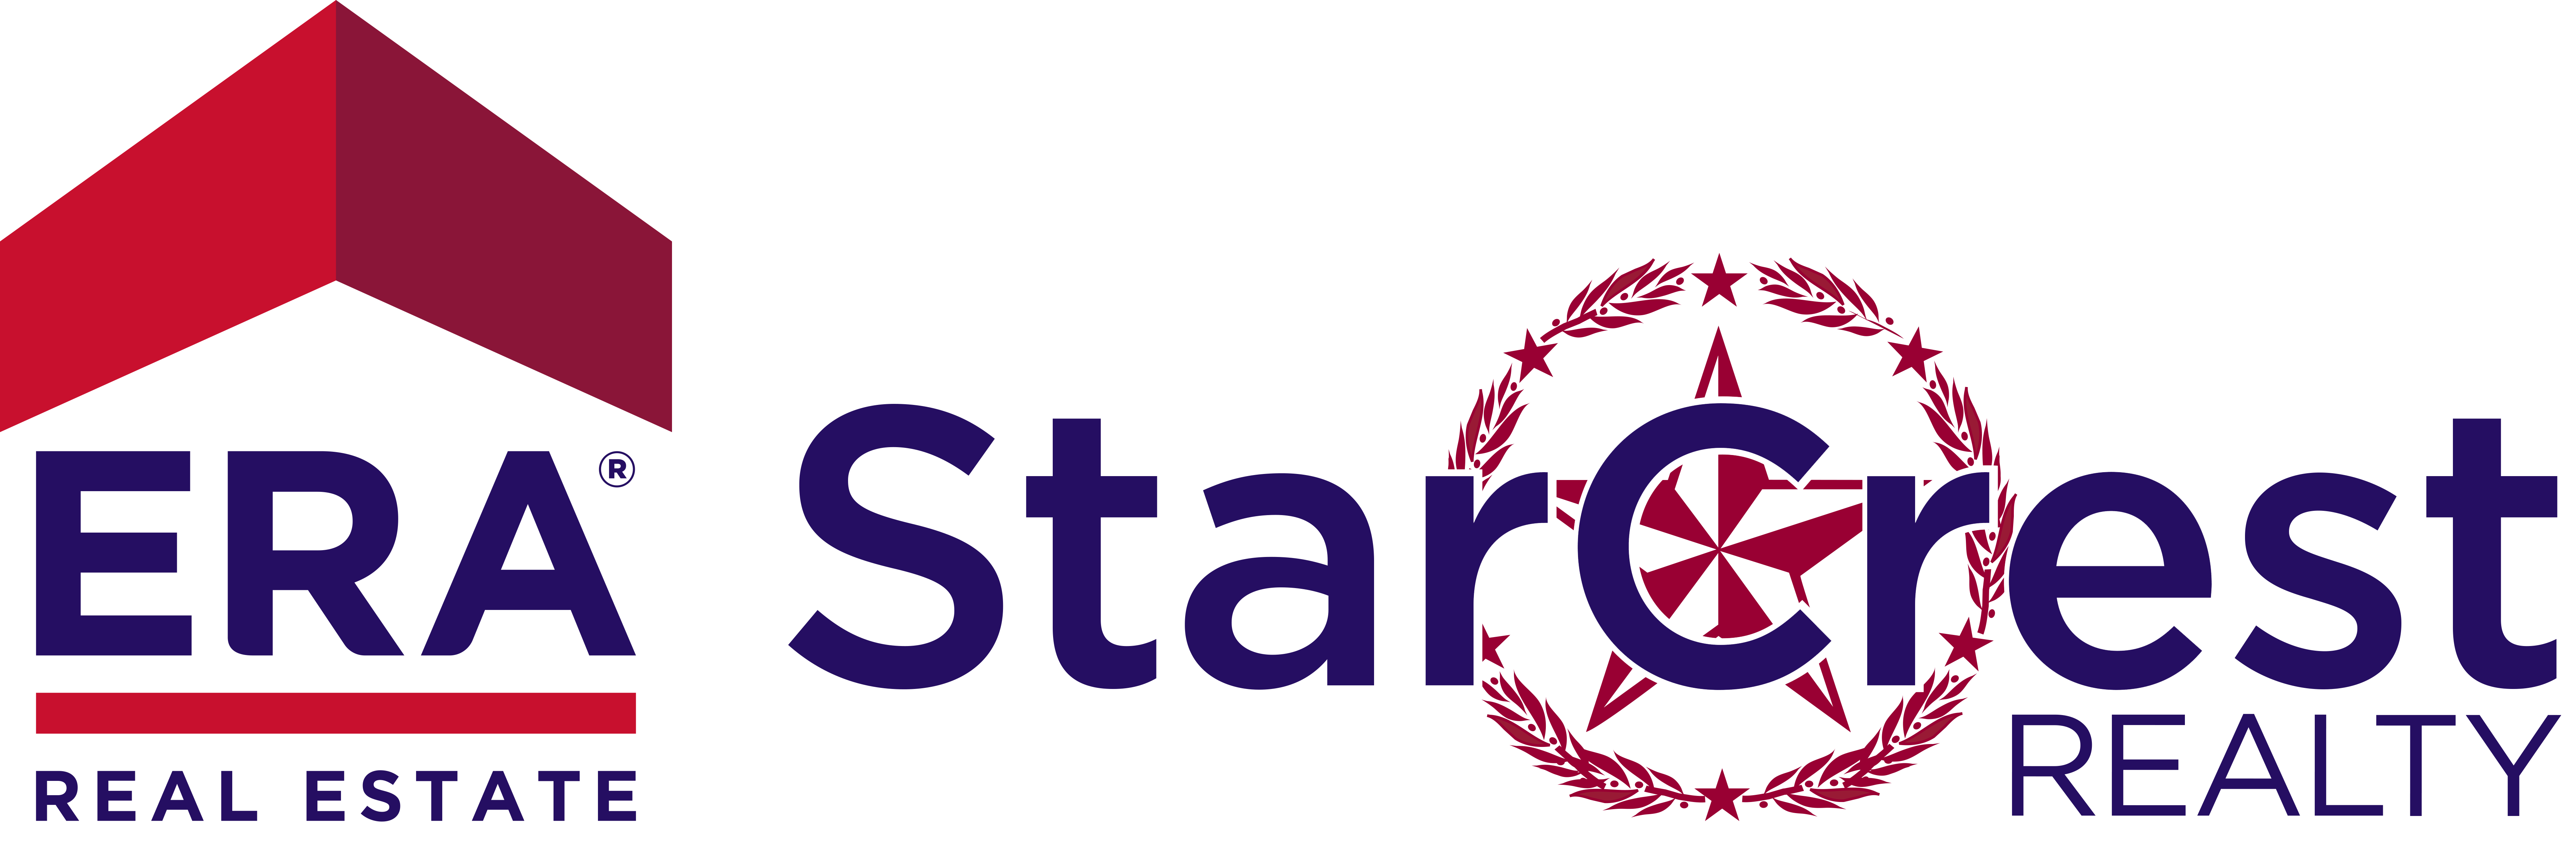 StarCrest Realty, LLC